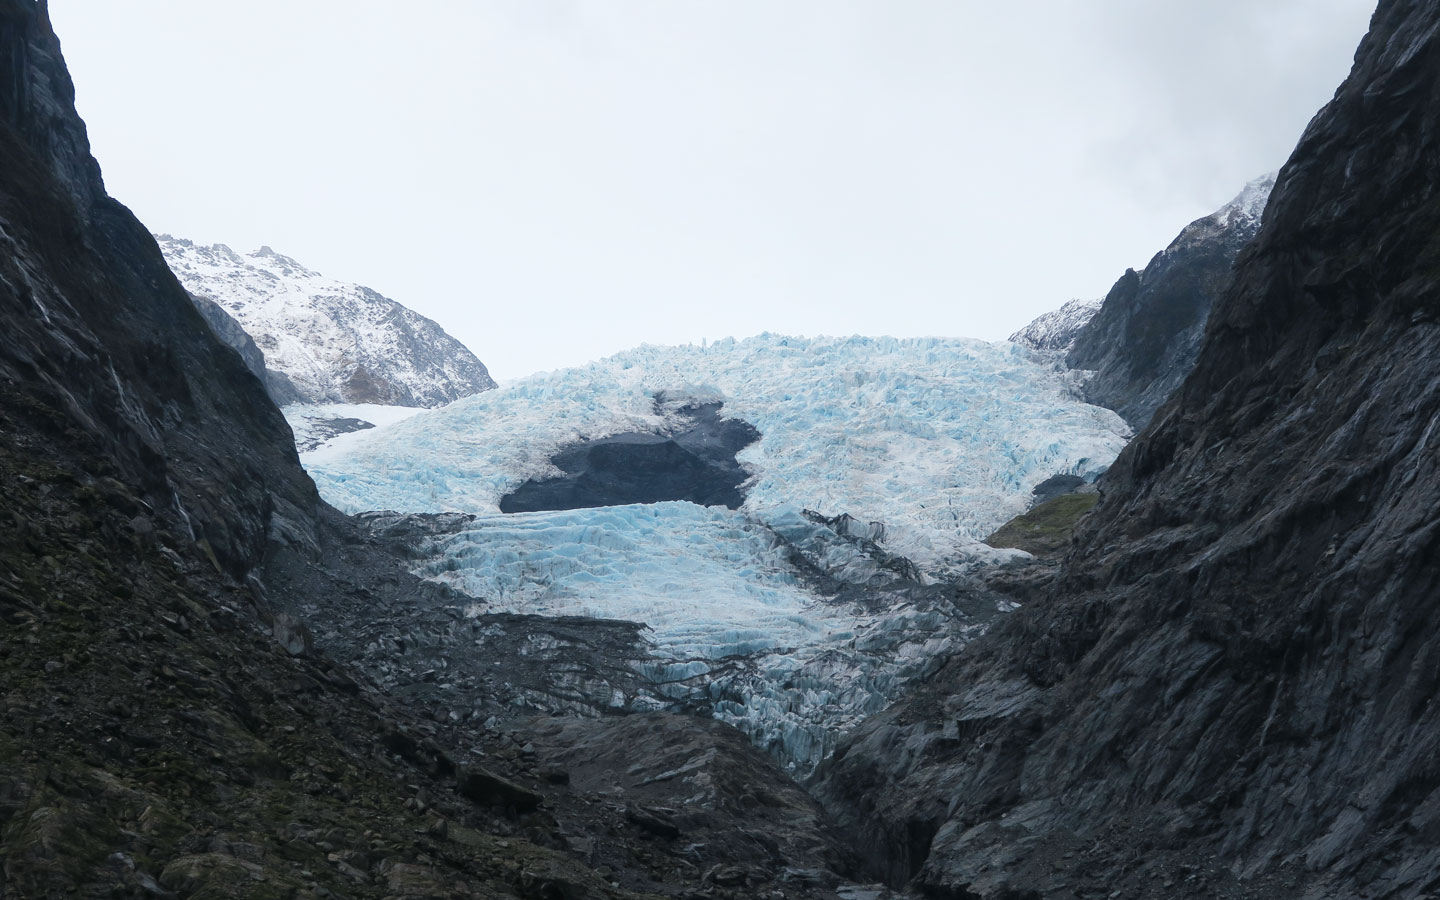 franz josef glacier in new zealand